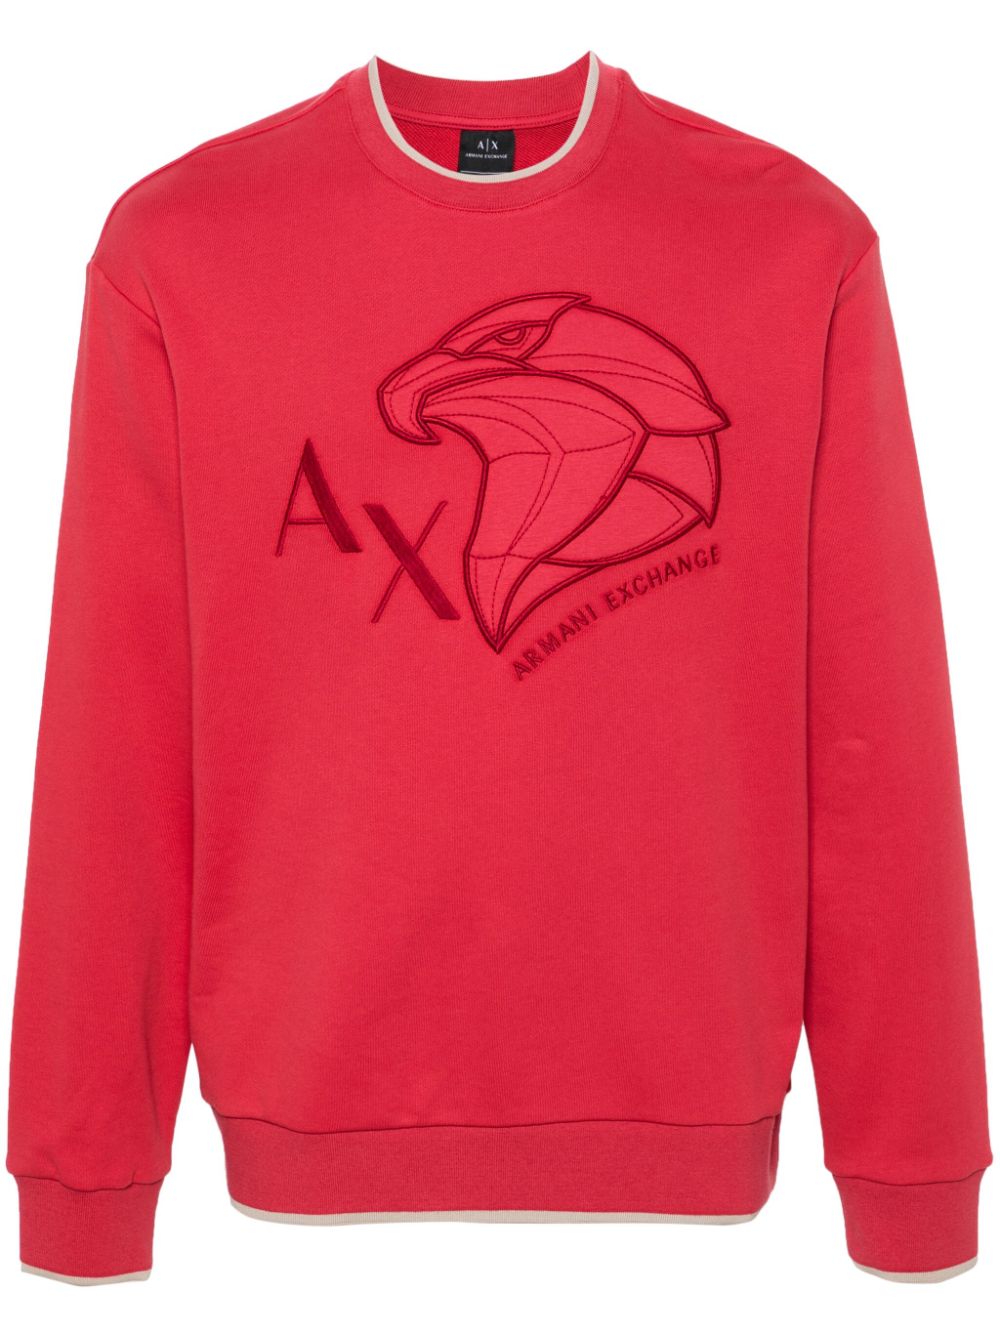 Eagle-embroidered cotton sweatshirt